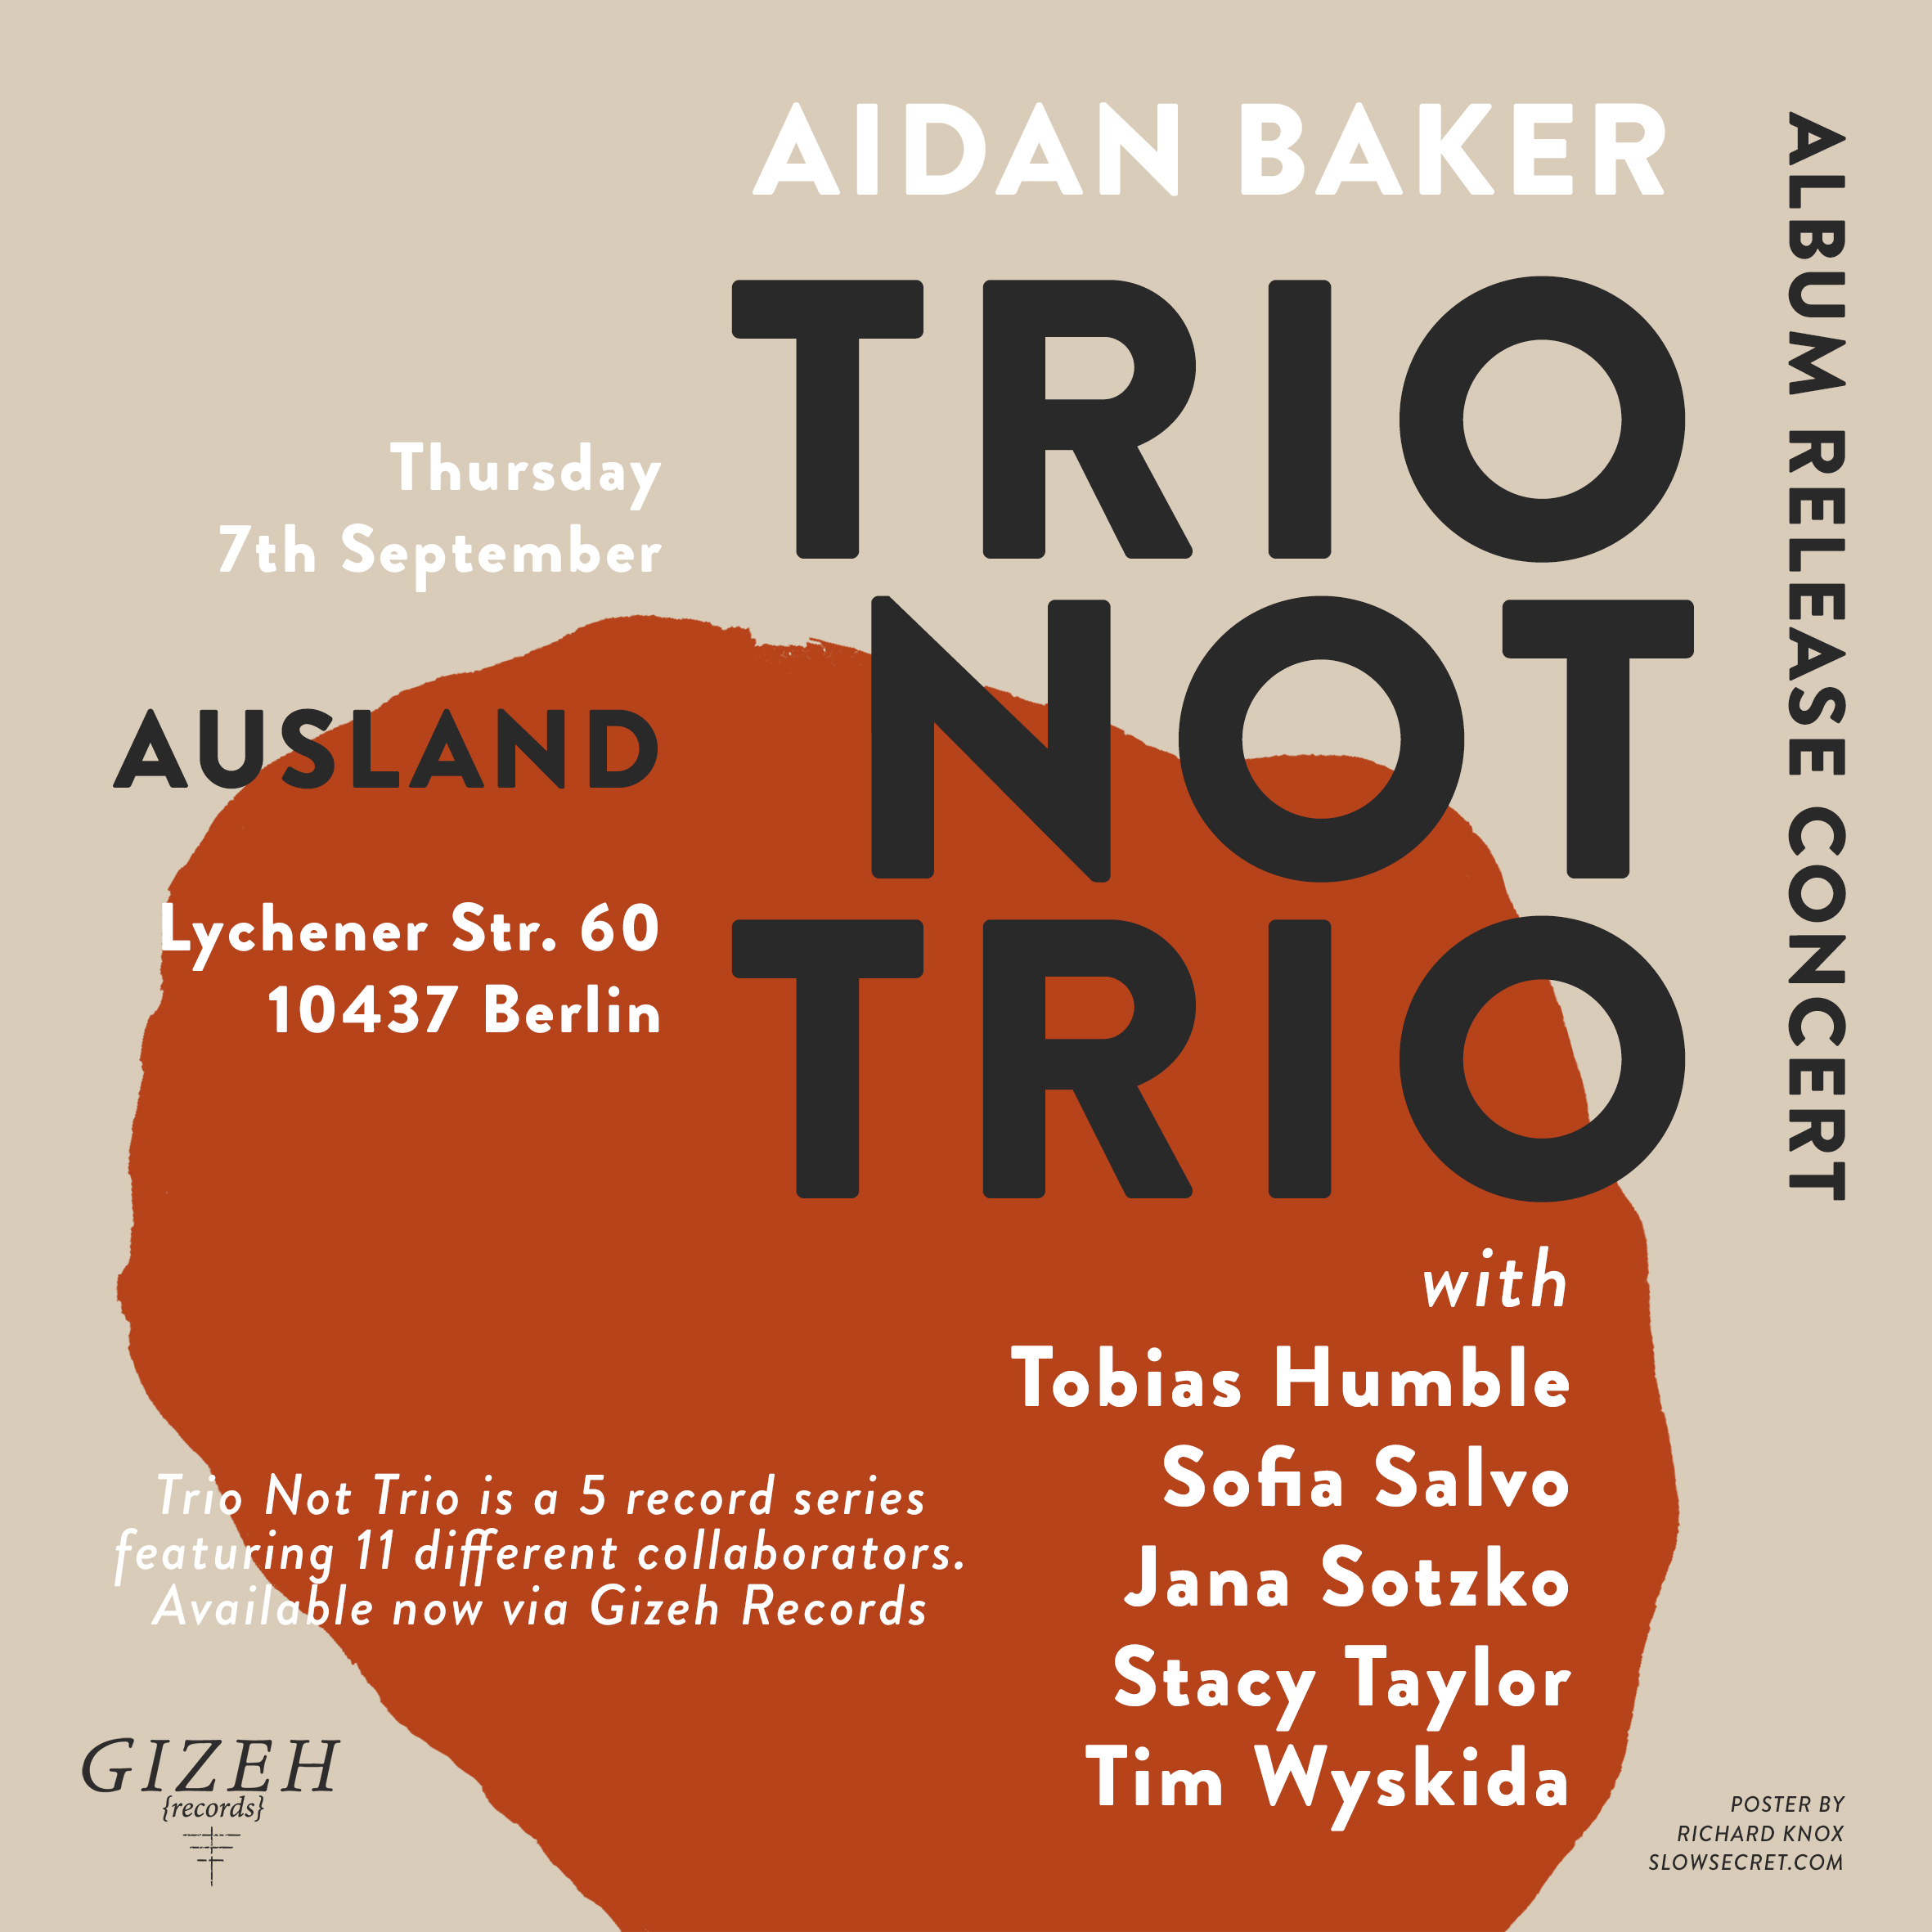 Image for Aidan Baker - Trio Not Trio (Album Release Show)